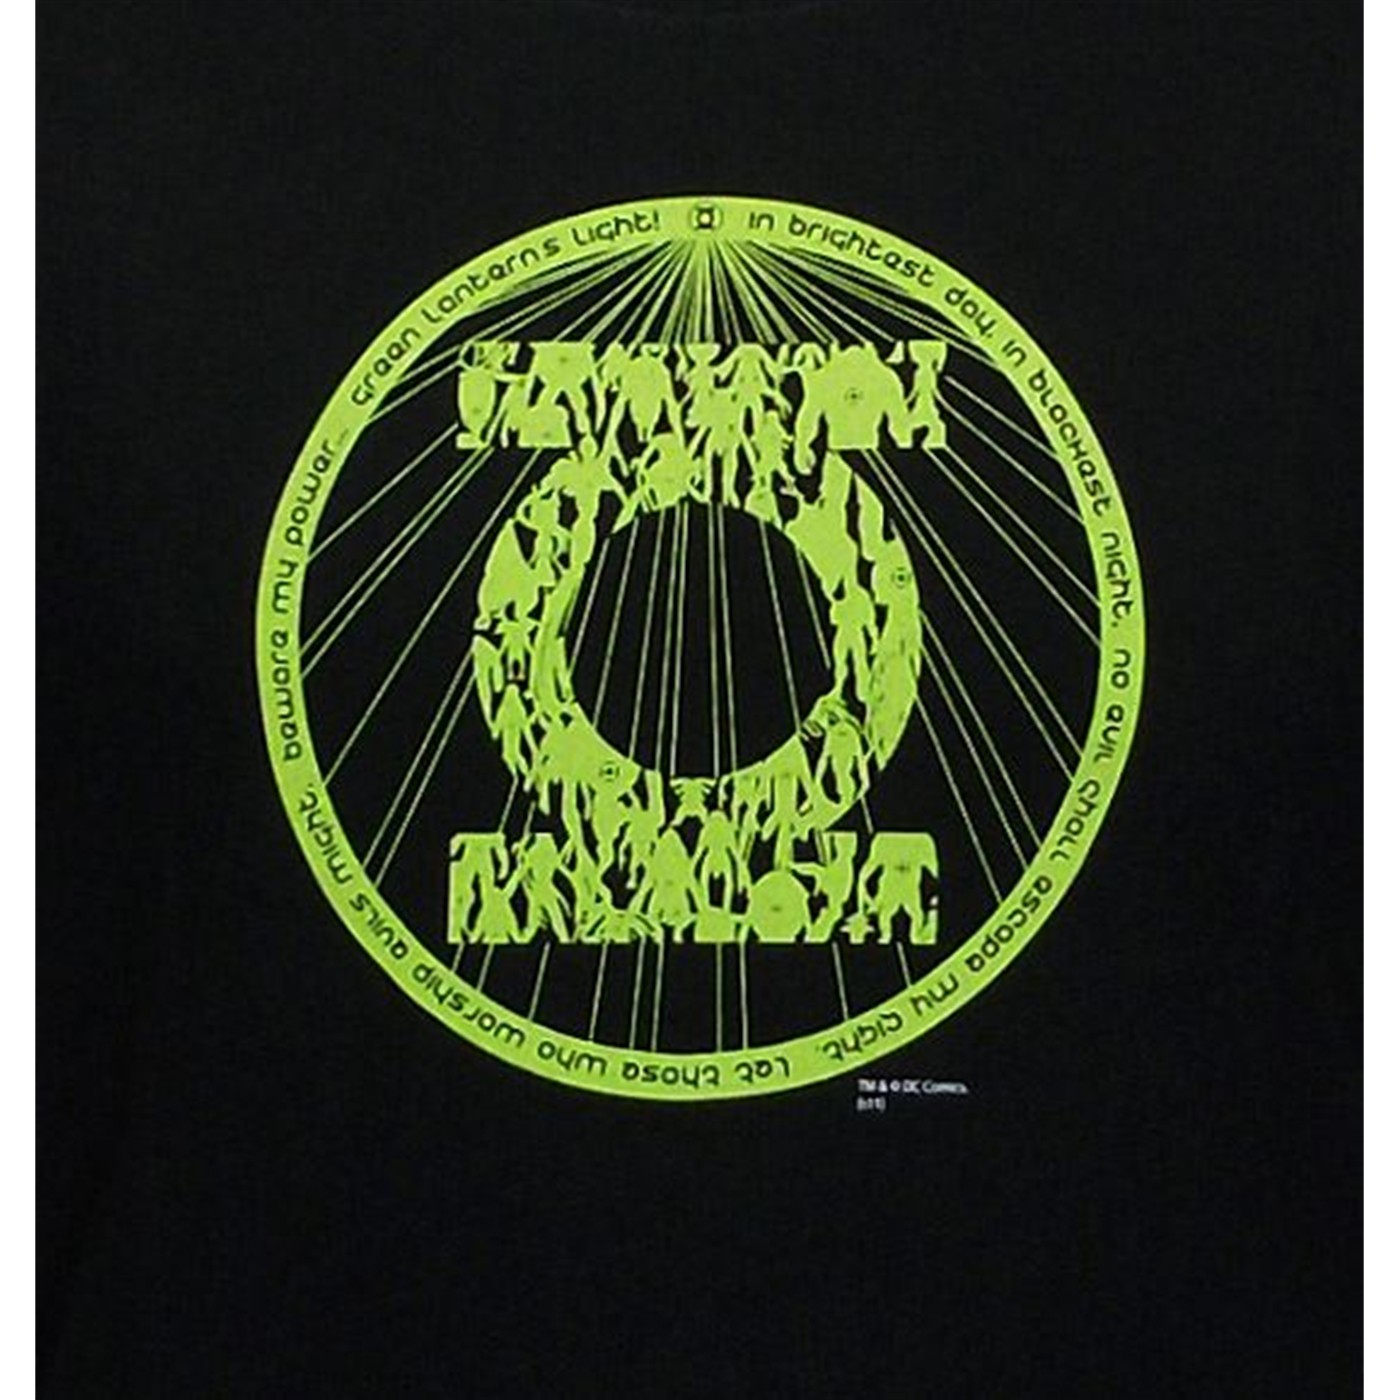 Green Lantern Oath and Member Symbol T-Shirt